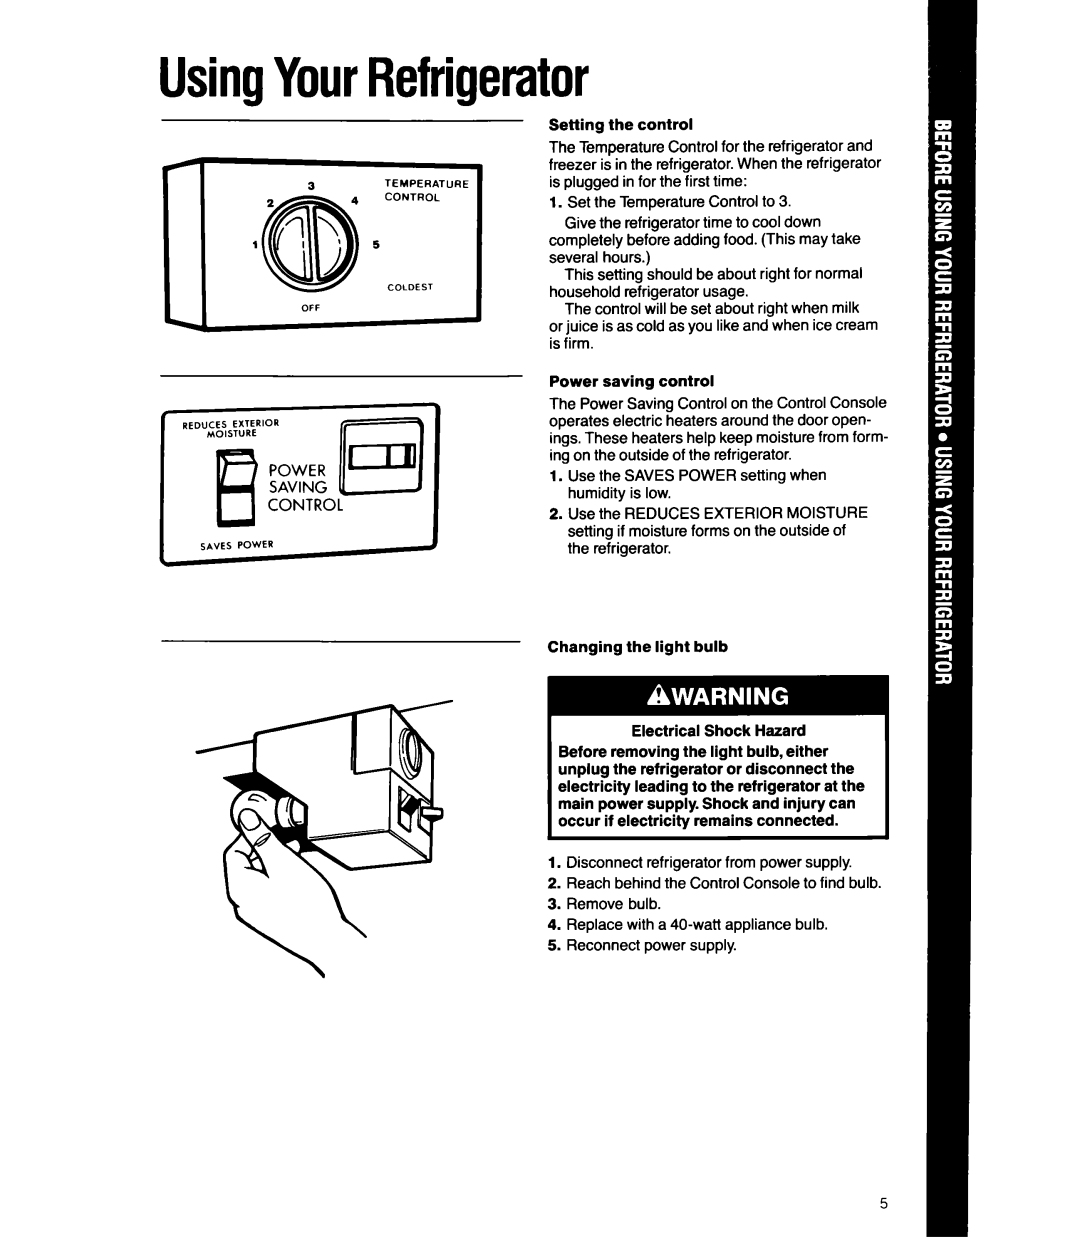 Whirlpool ETl4CC manual UsingYourRefrigerator 